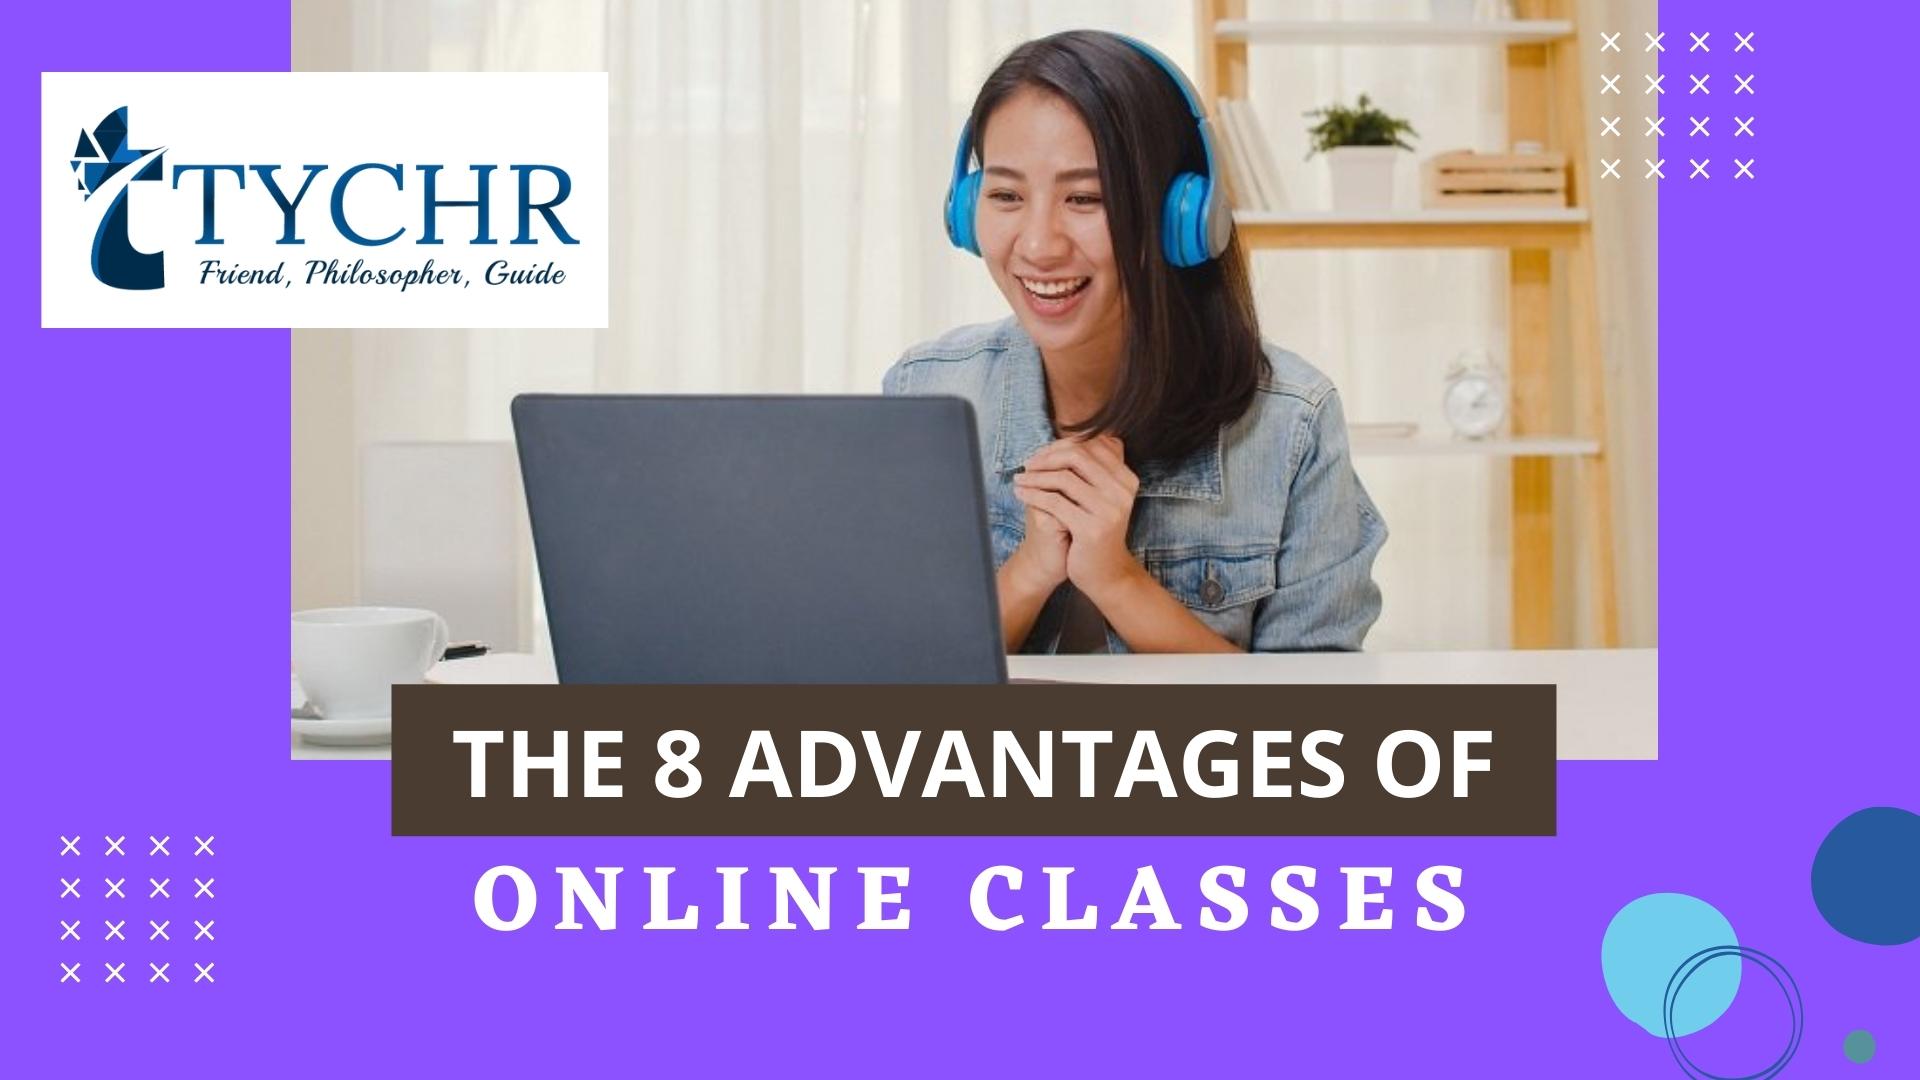 The 8 Advantages of Online Classes